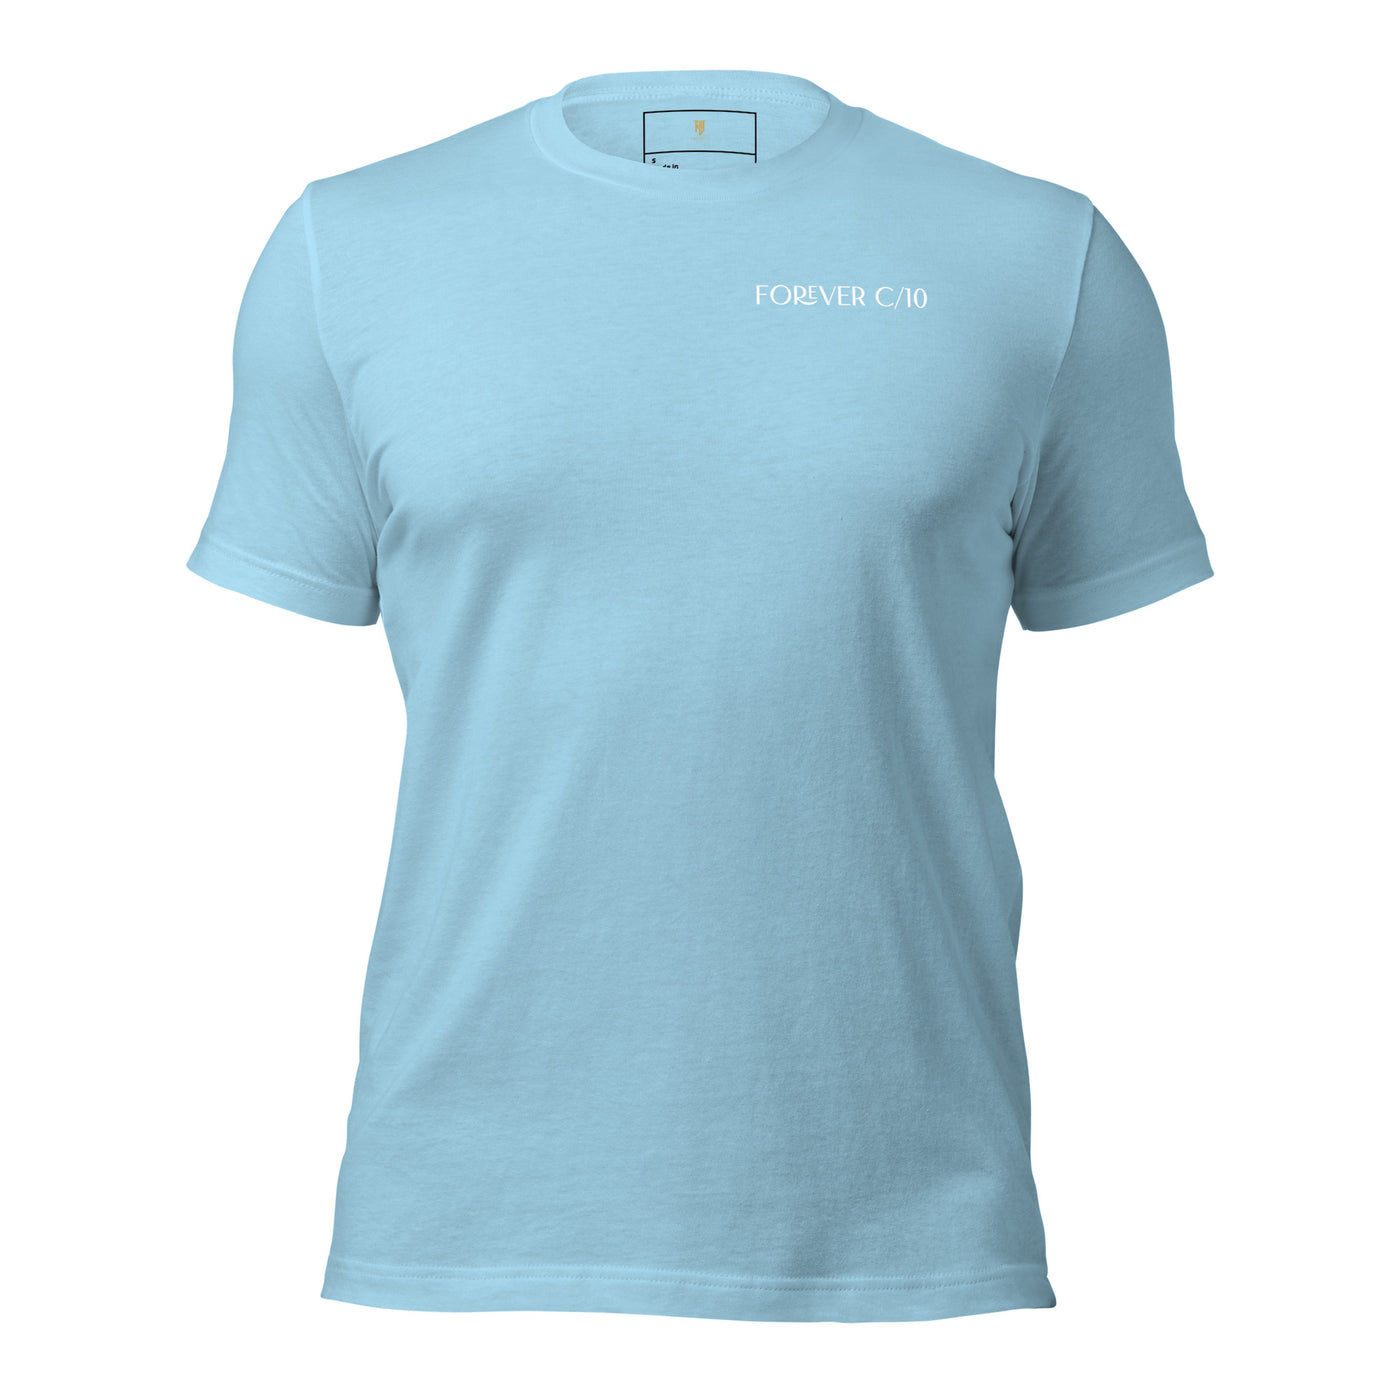 Gen 3 Two-Faced Unisex T-shirt (Back Print); Best Unisex C10 T-shirt, Unique Unisex C10 T-shirt, Gender Neutral C10 T-shirt Options, Best C10 T-shirt Deals, Fashion-Forward C10 Tees, Women C10 Tops, Men C10 T-shirt